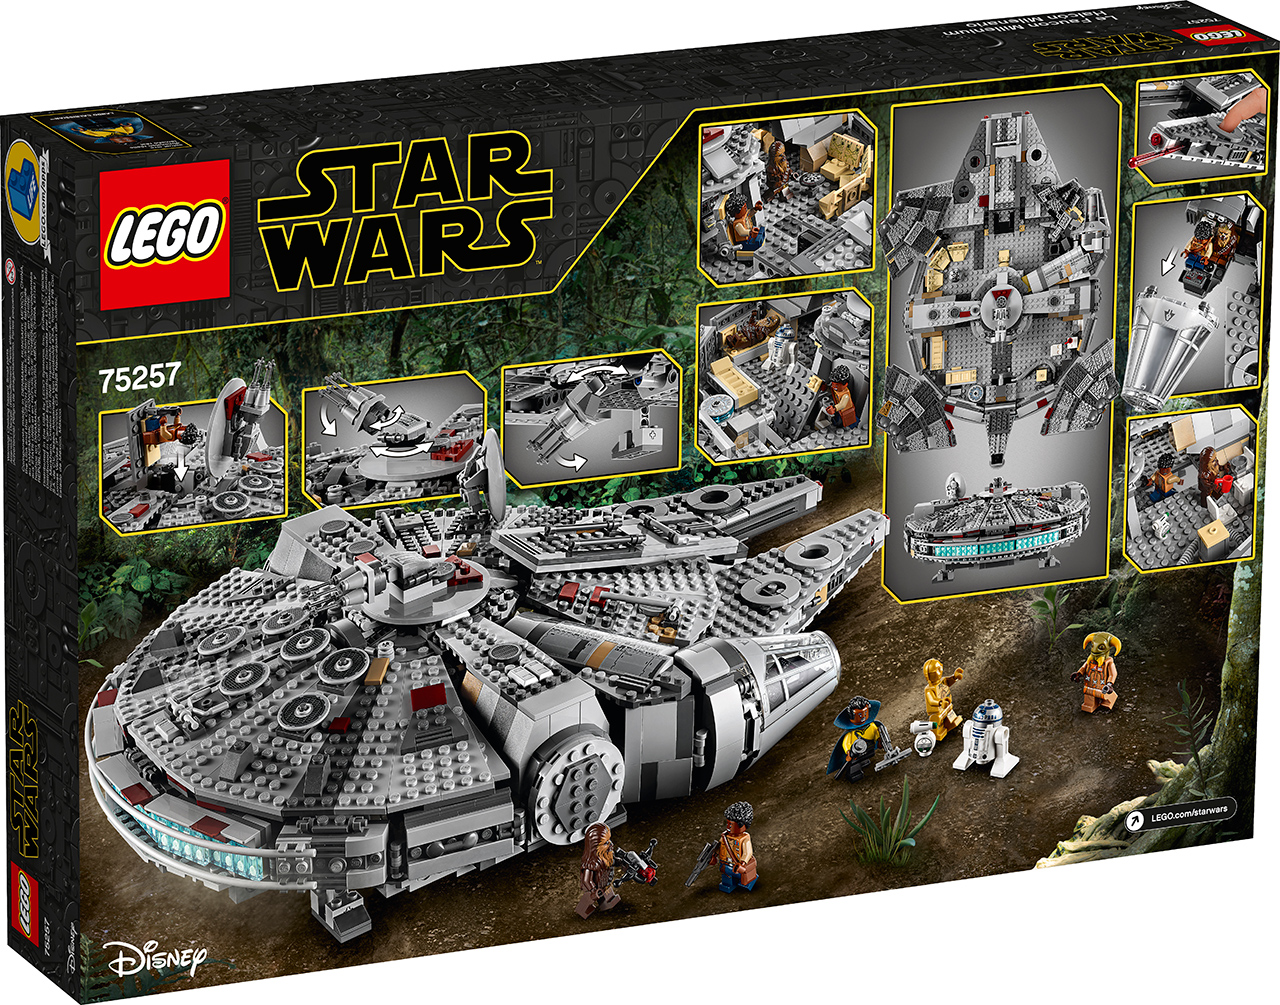 Star Wars Mandalorian Skywalker Lego Sets Revealed Slashgear